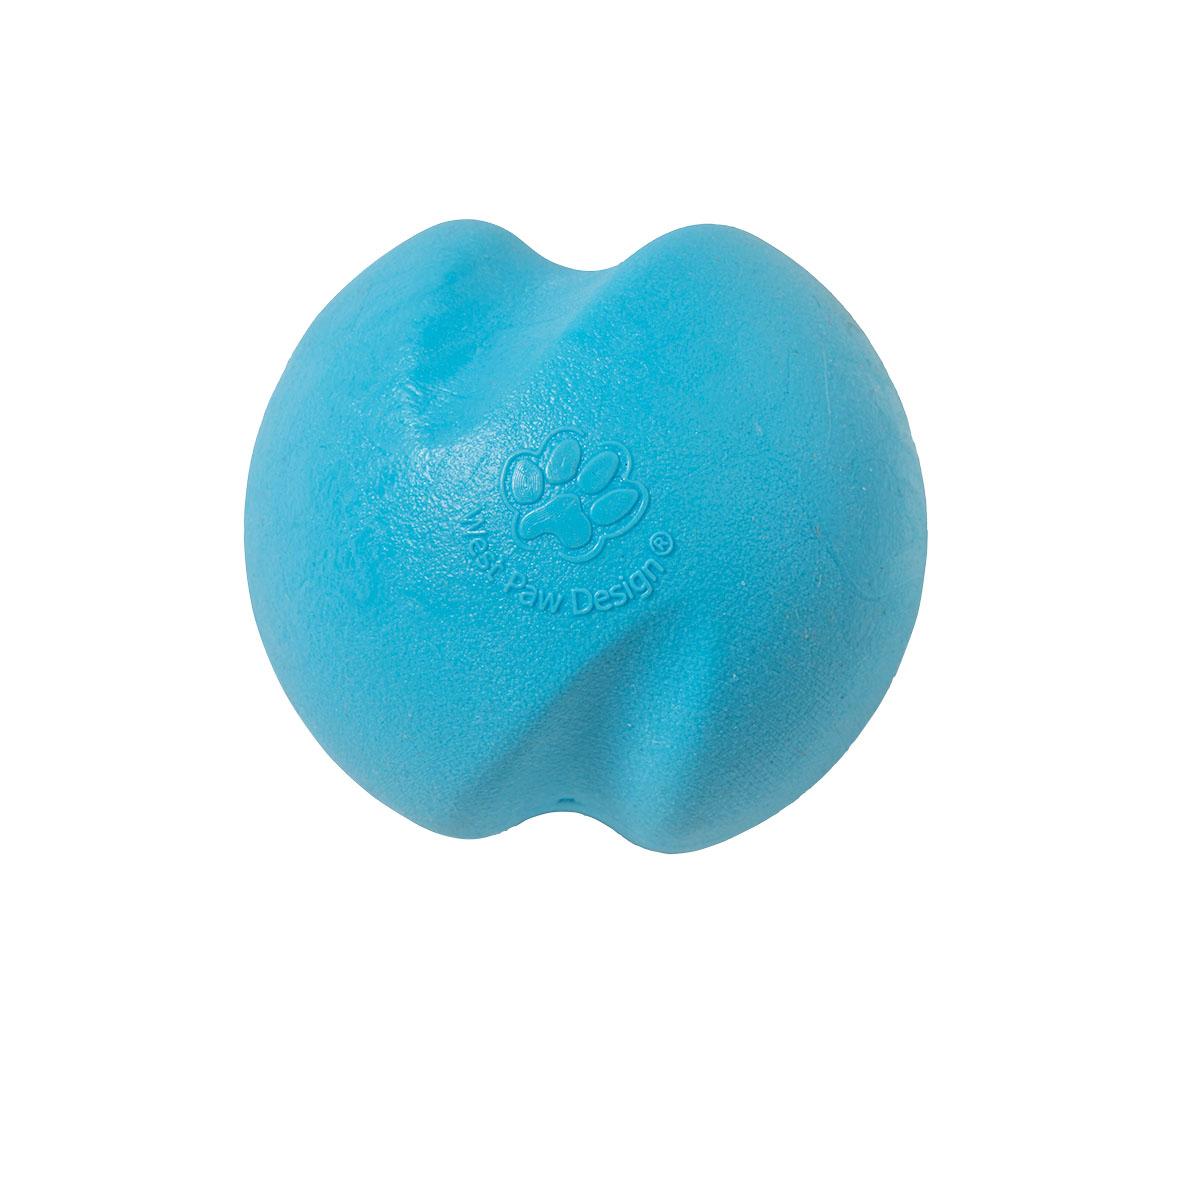 West Paw Jive Dog Toy - Aqua Blue